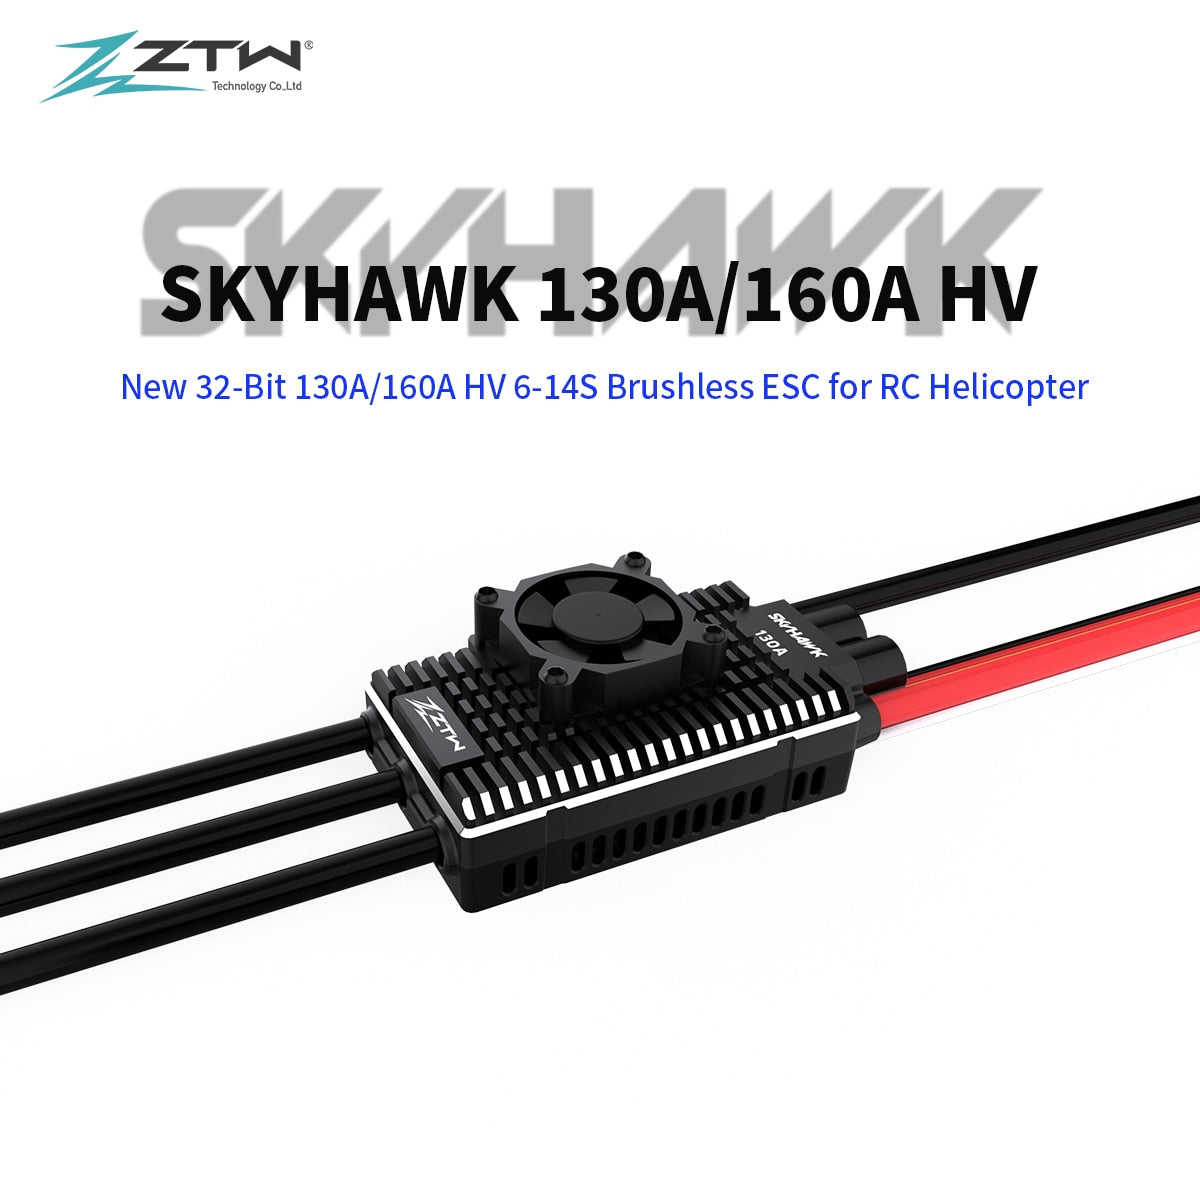 Z2TL Technology Co_Lld SKYHAWK 130A/160